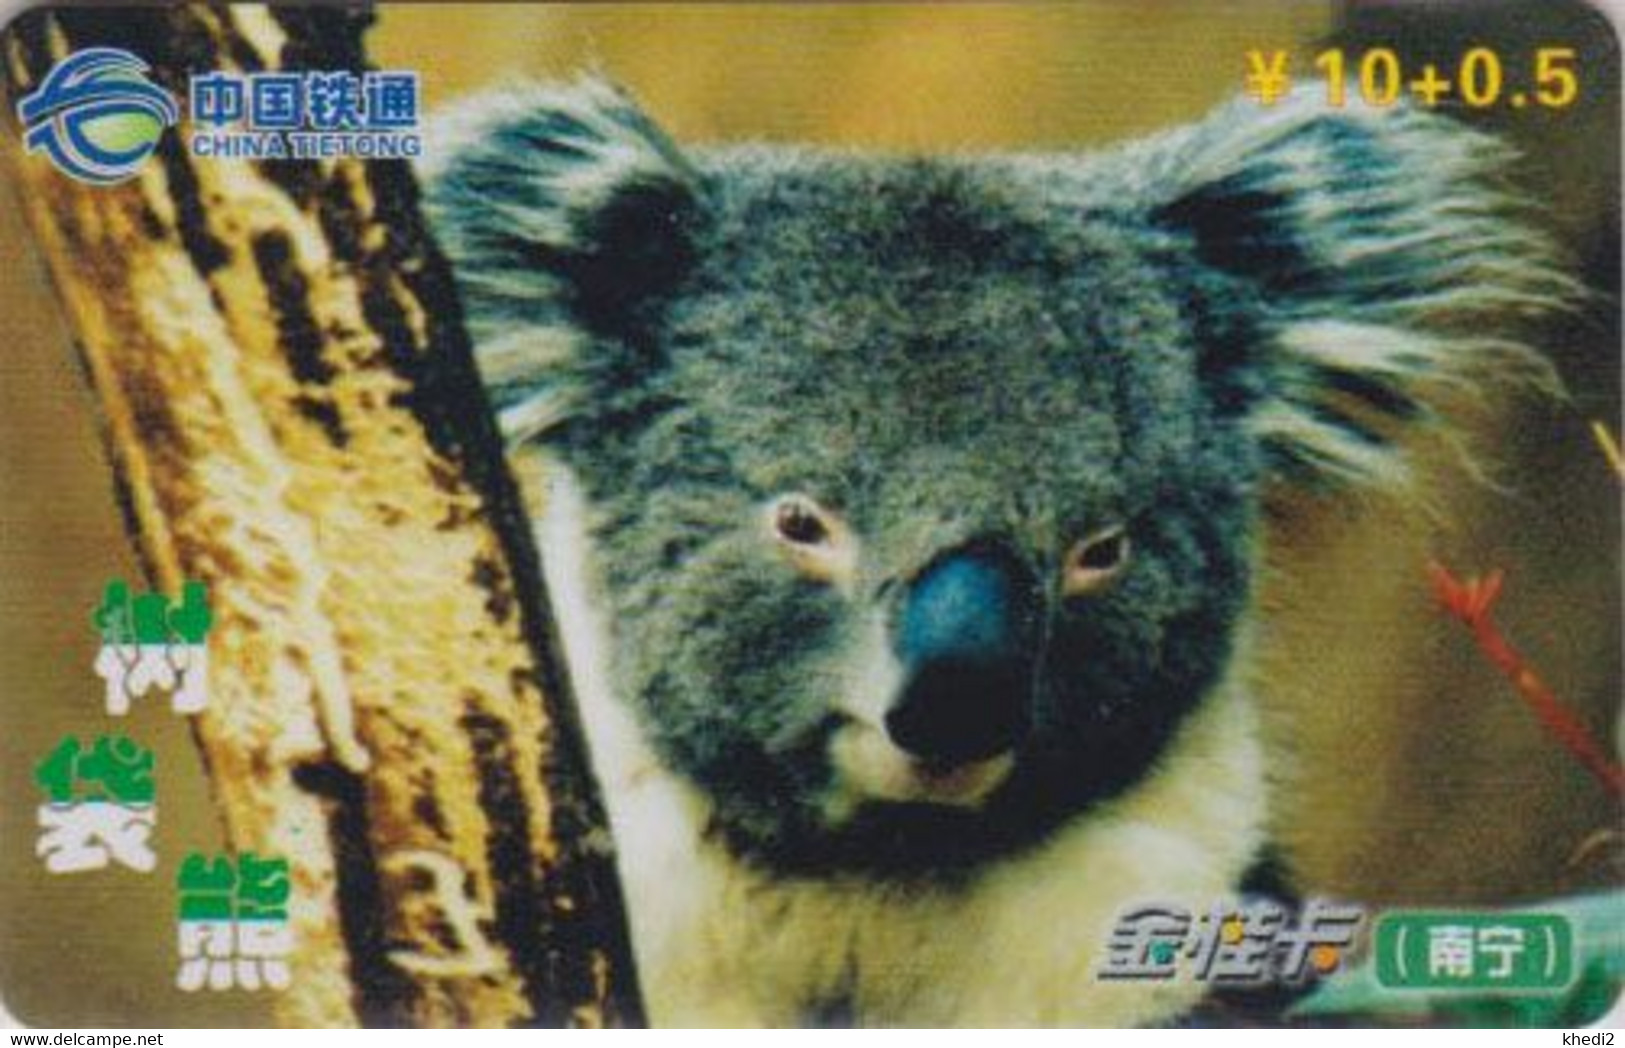 Télécarte CHINE - ANIMAL / SERIE 4/8 - Bébé KOALA - CHINA TIETO?G Phonecard Telefonkarte  - BE 201 - Chine